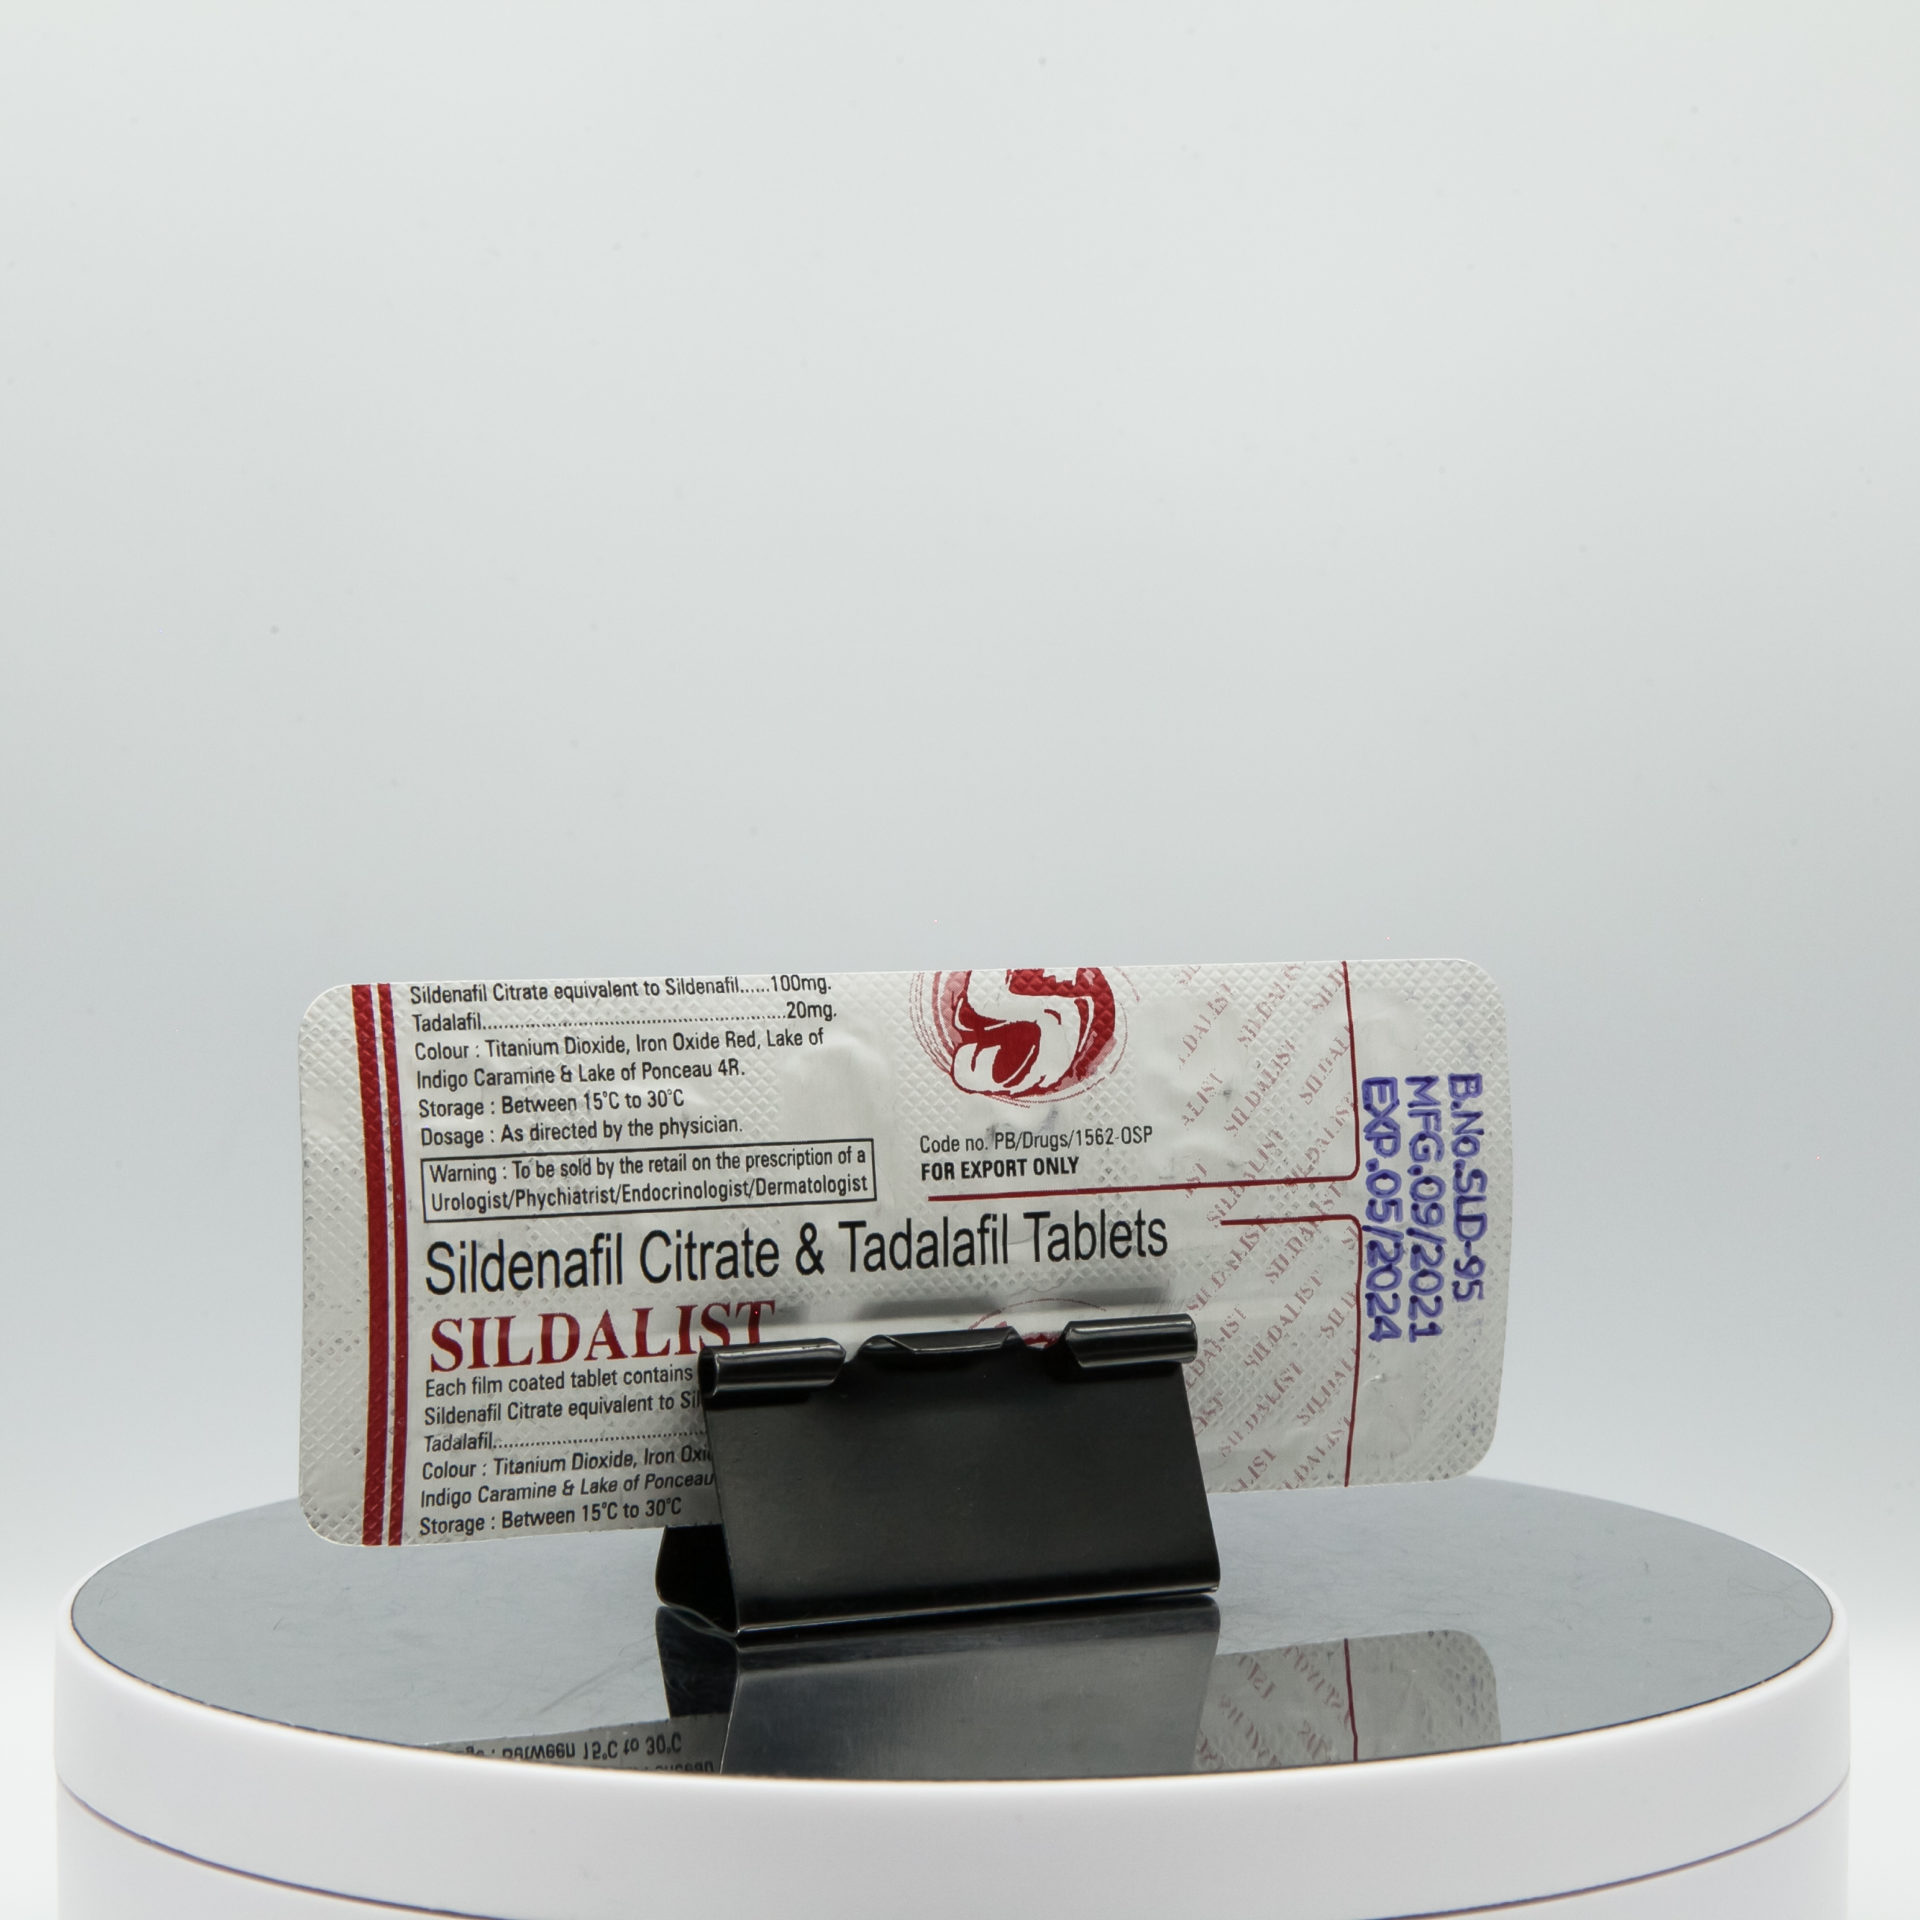 Sildalist 120 mg RSM Enterprises Sildenafil Citrate (Viagra generic) 3